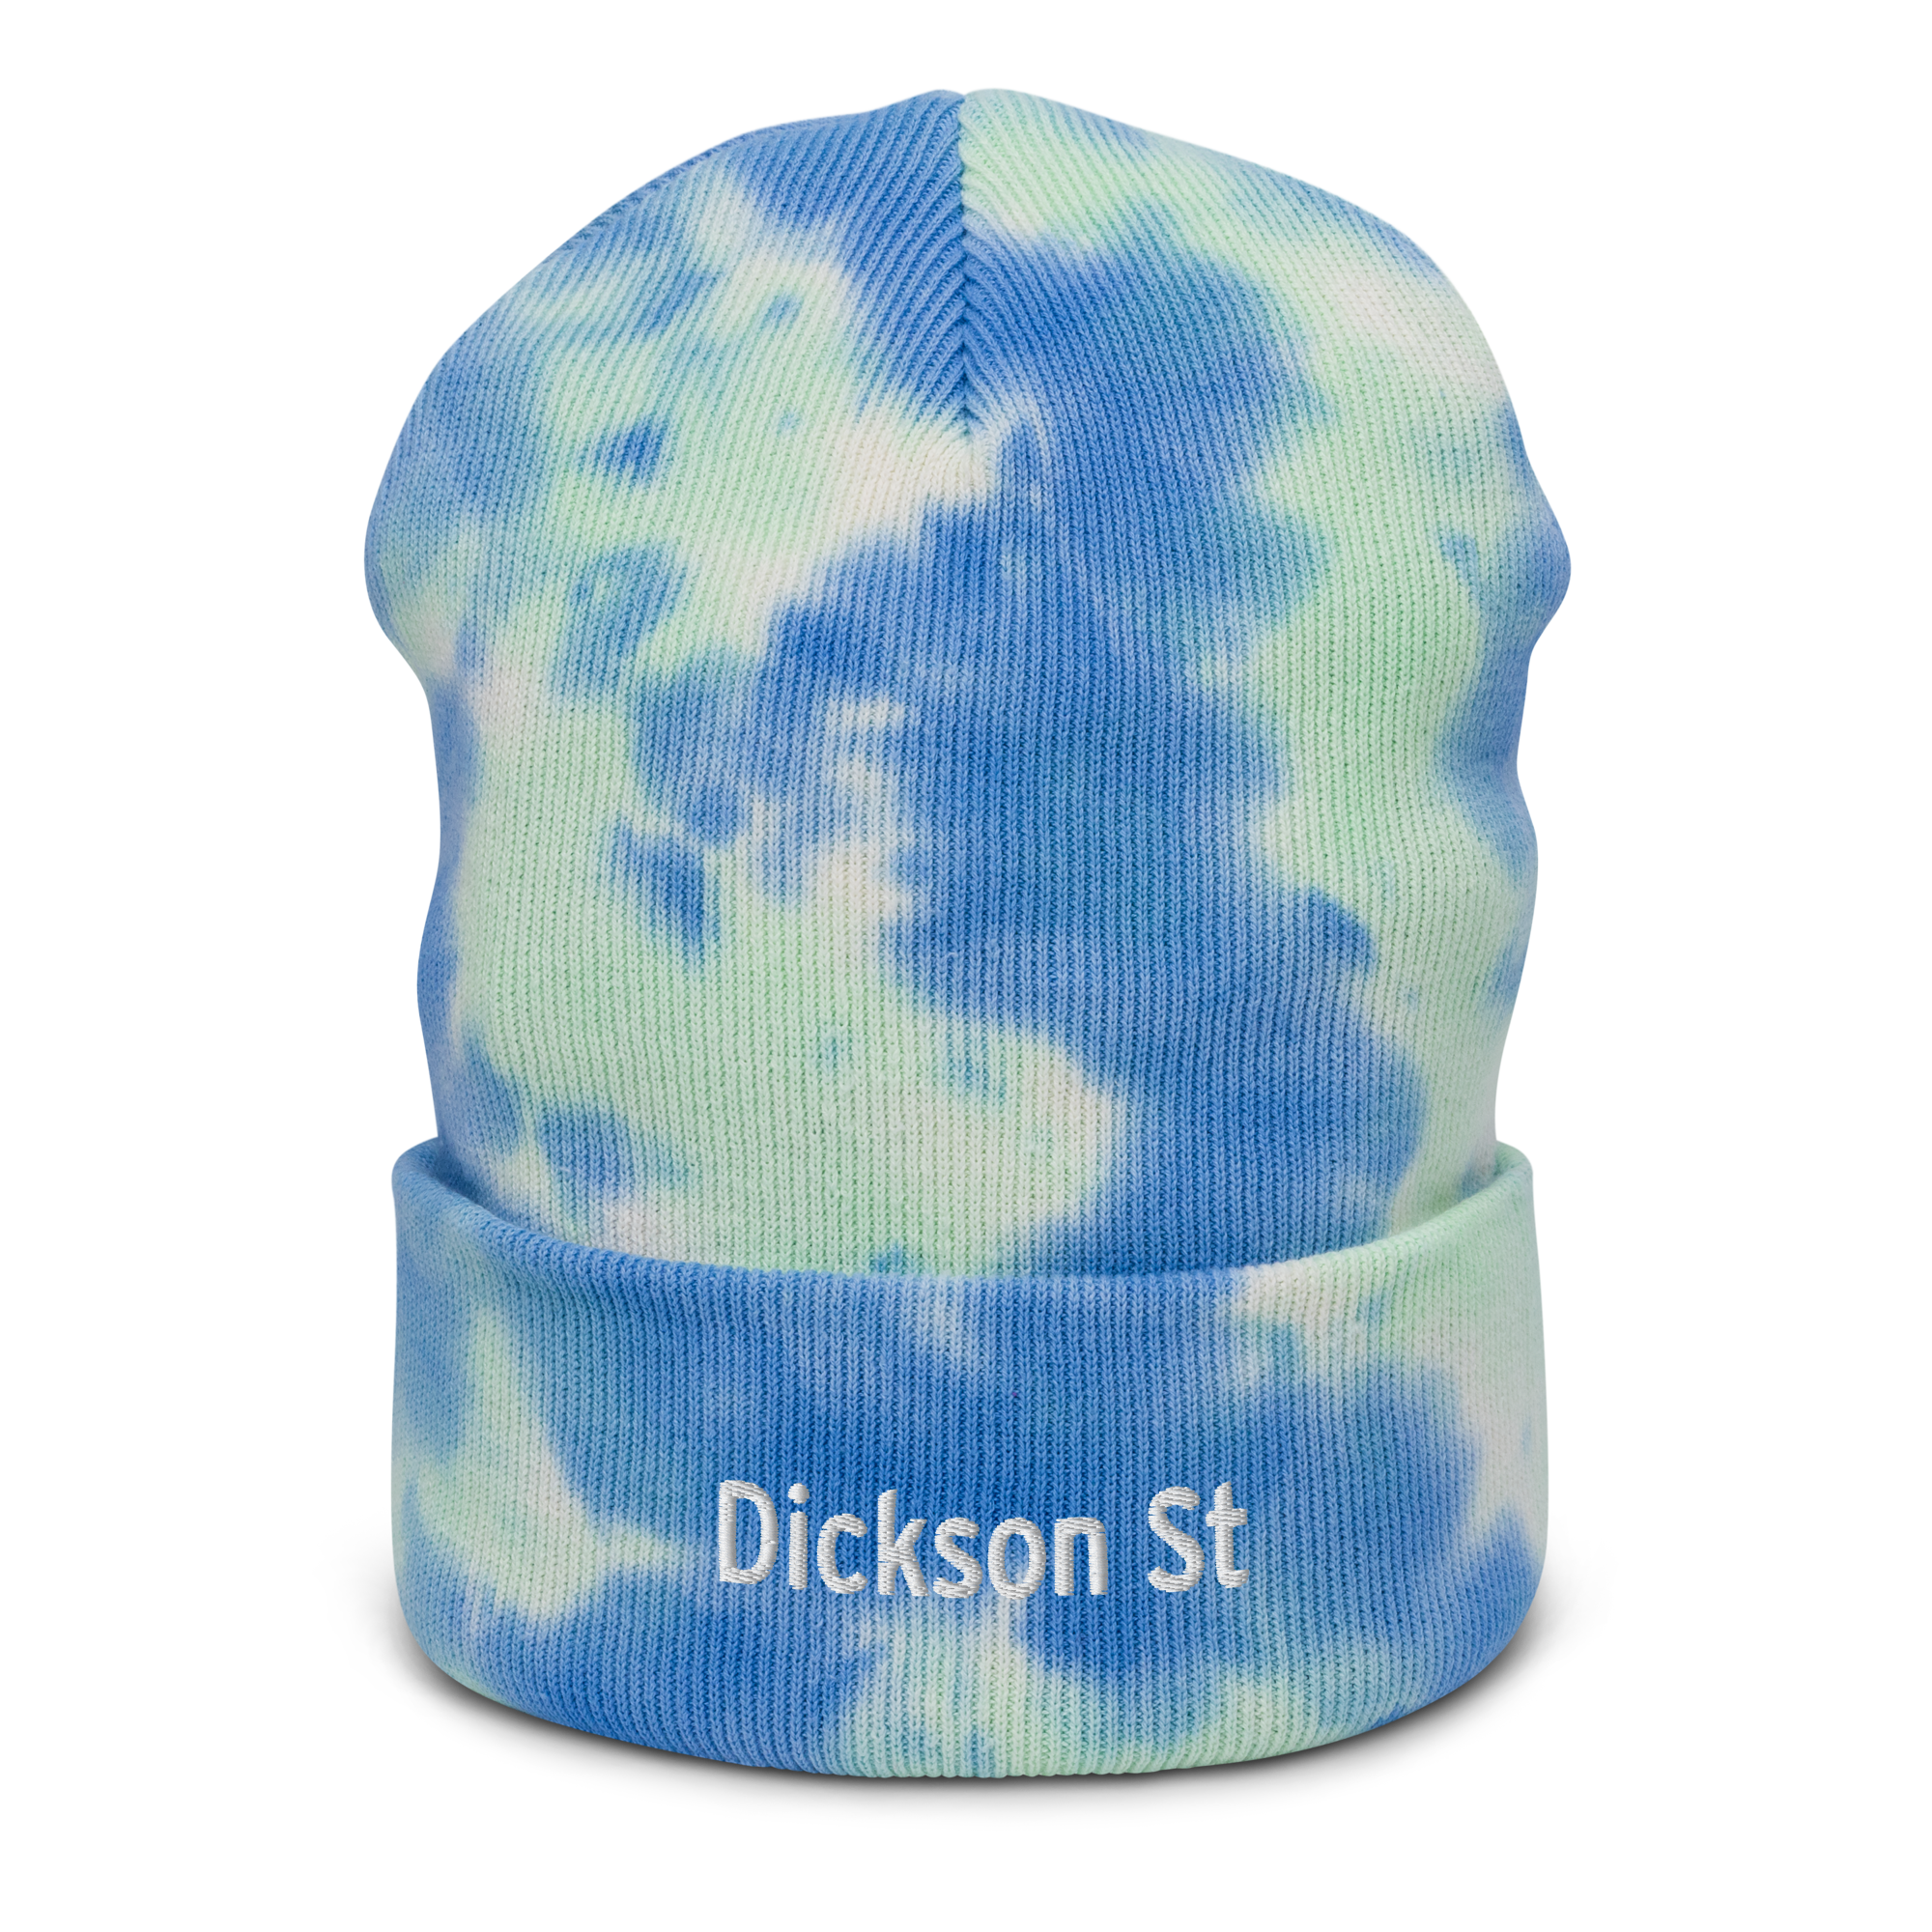 Dickson St Tie-dye beanie